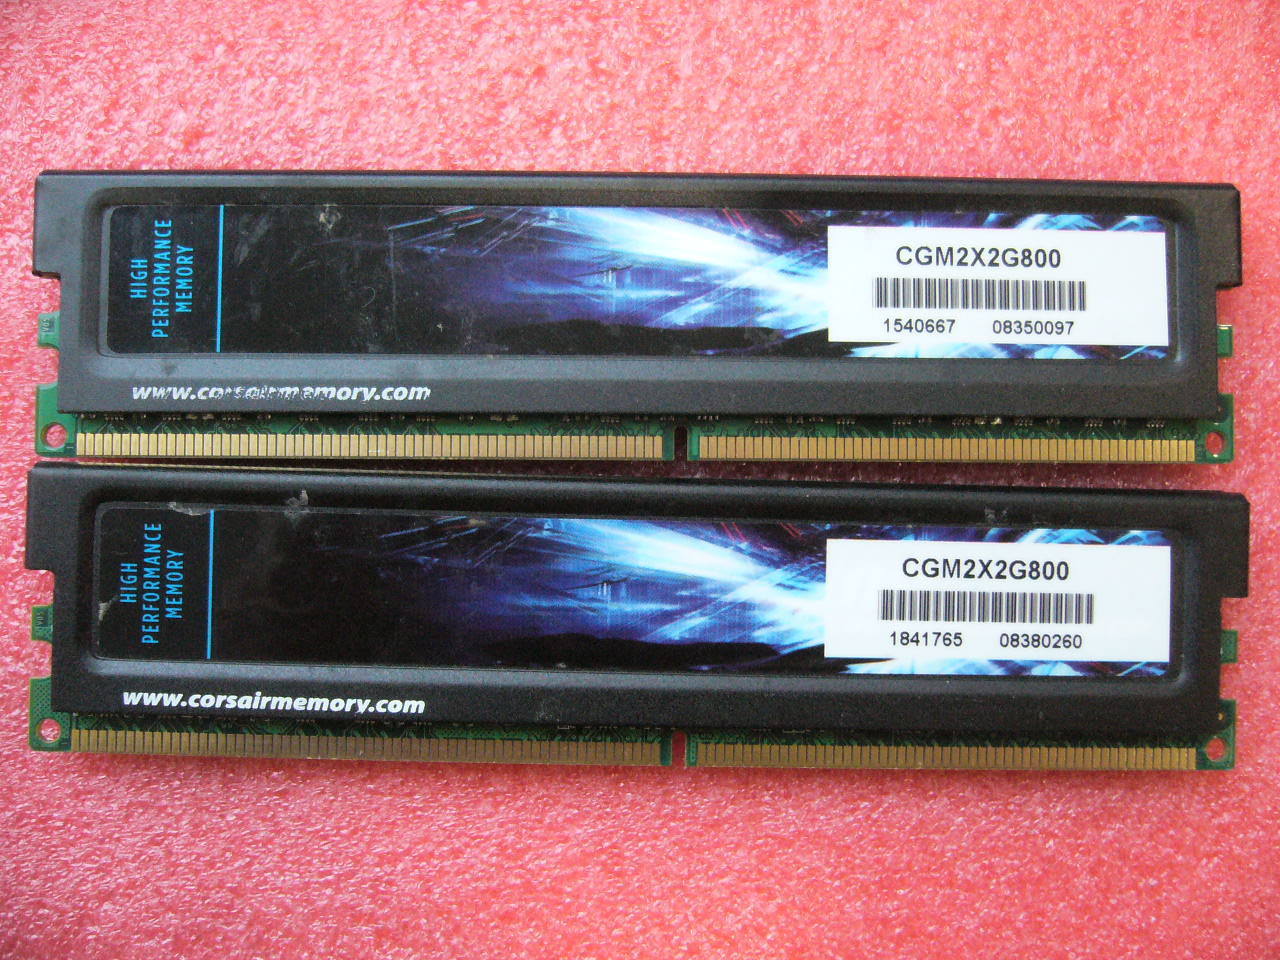 QTY 1x 2GB DDR2 800Mhz non-ECC desktop memory CORSAIR CGM2X2G800